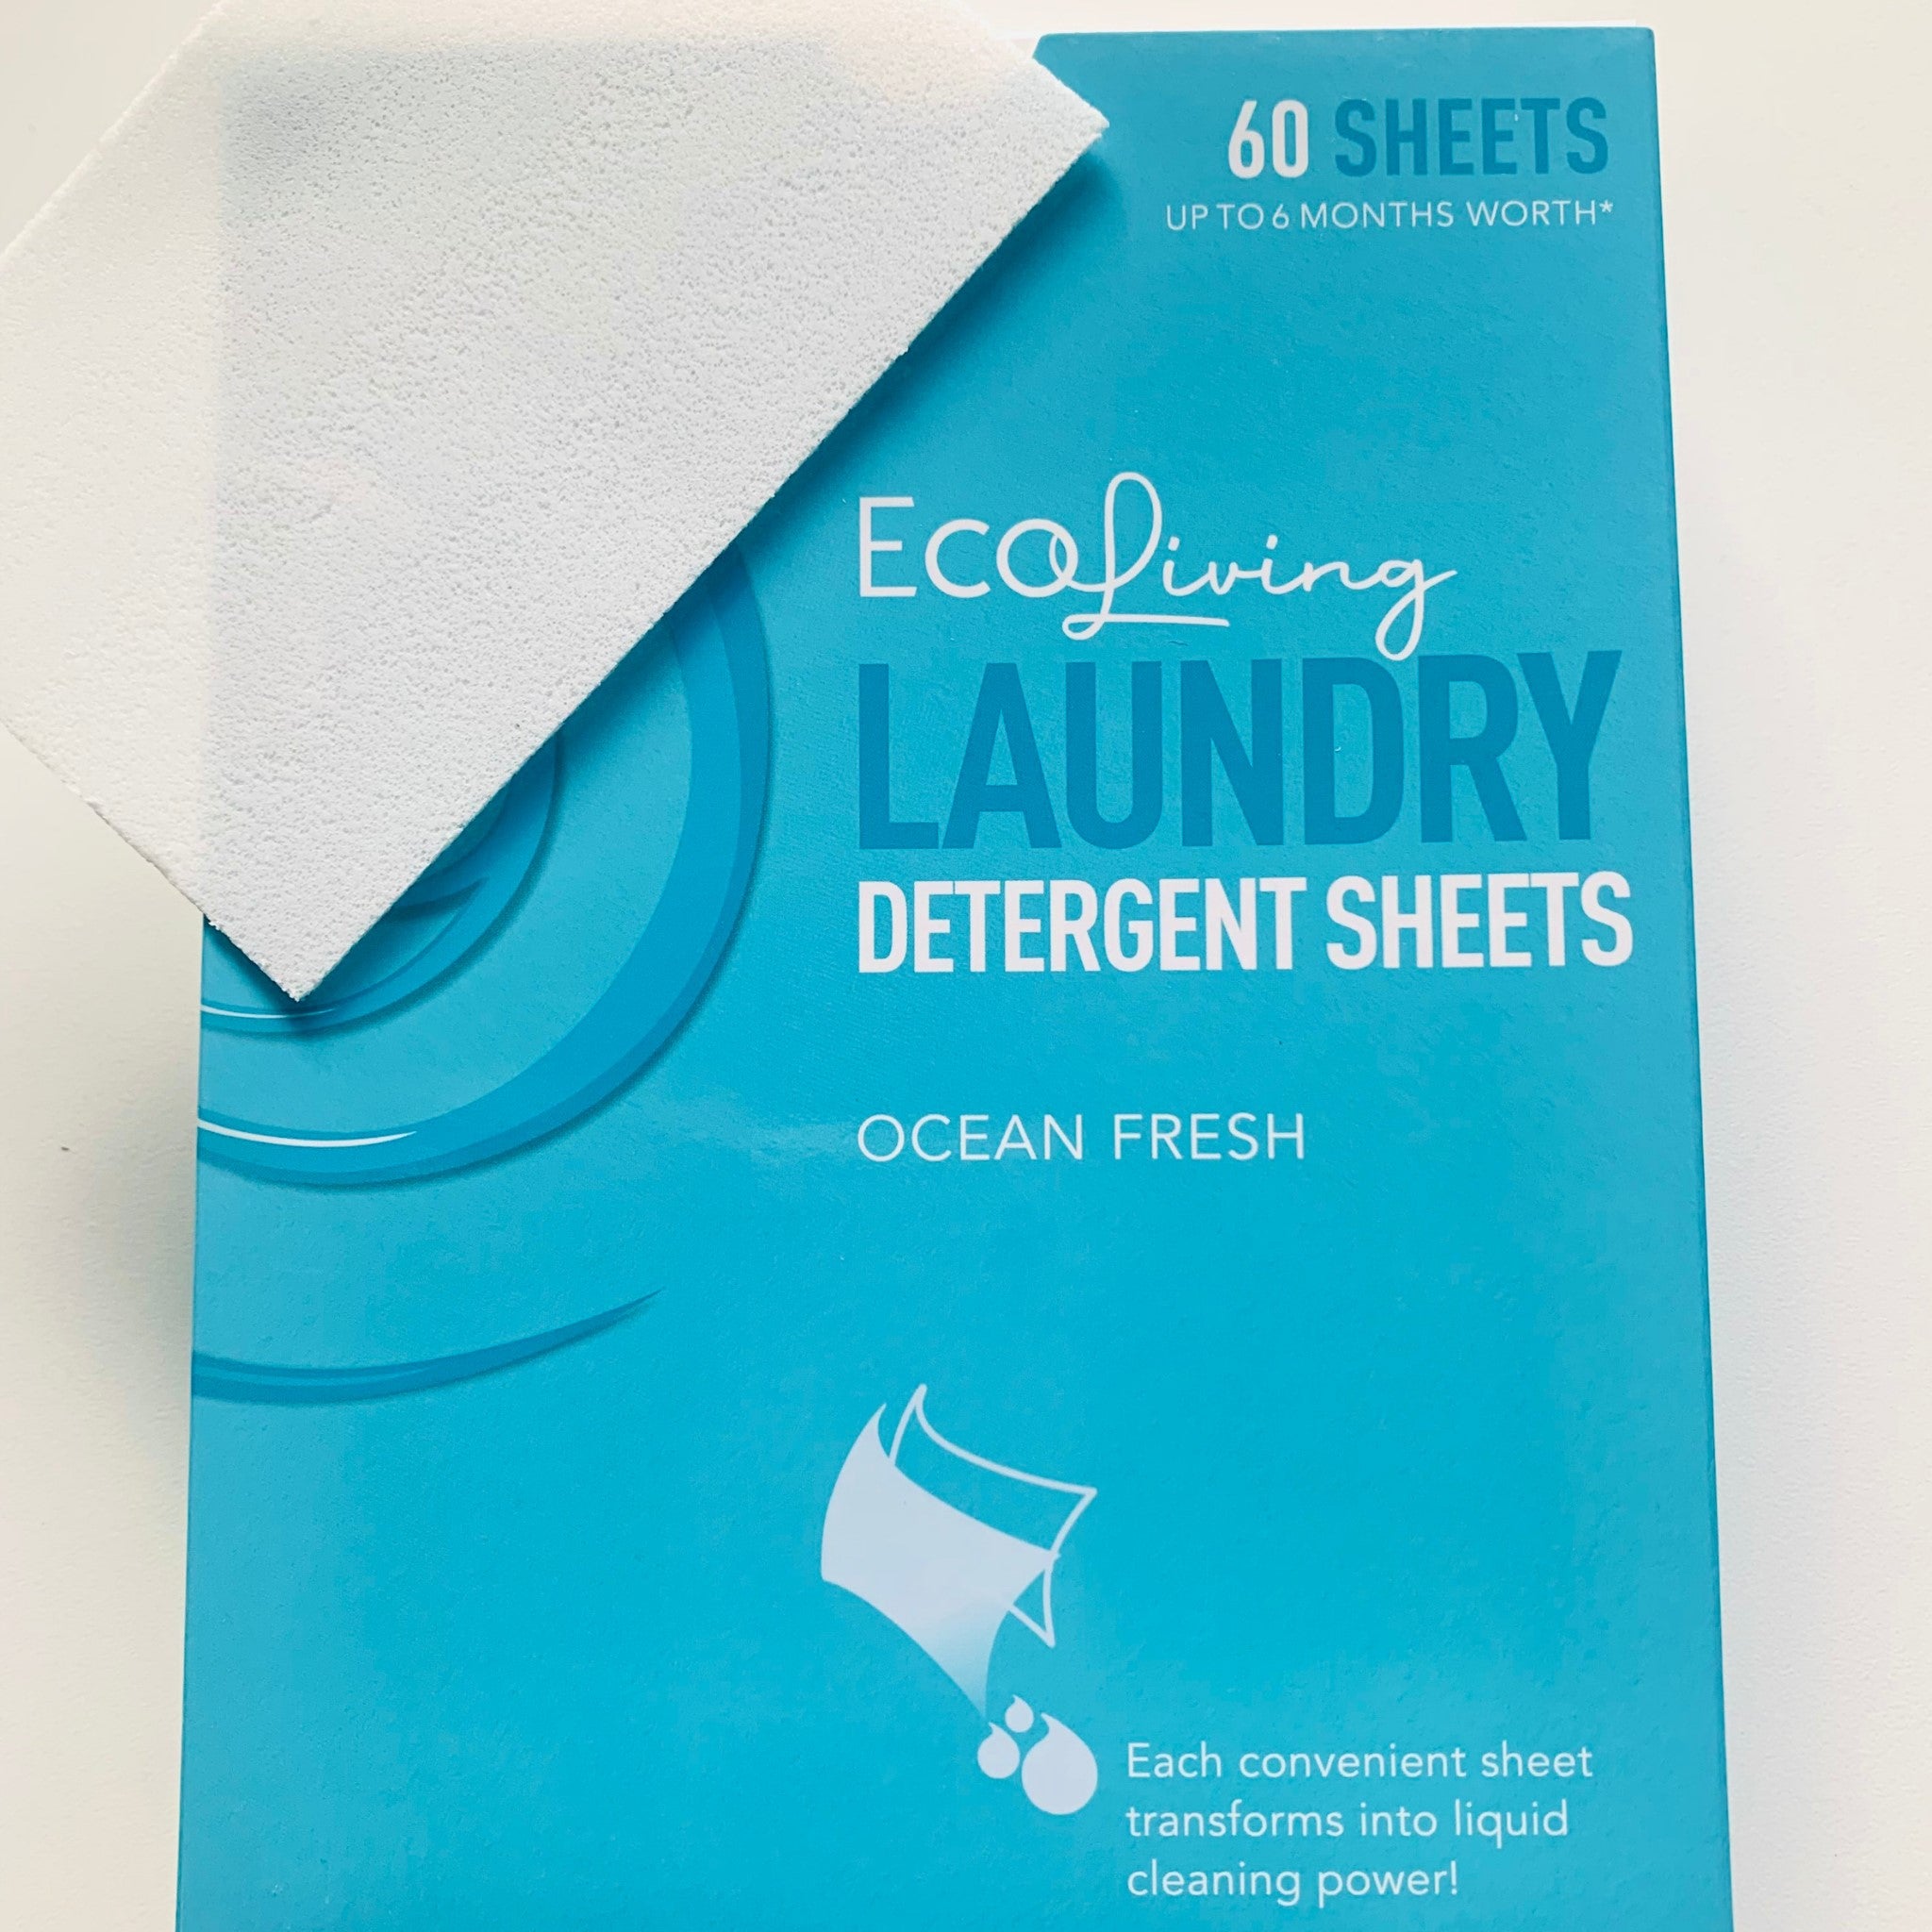 Ocean Fresh Laundry Detergent Sheets - 60 sheets